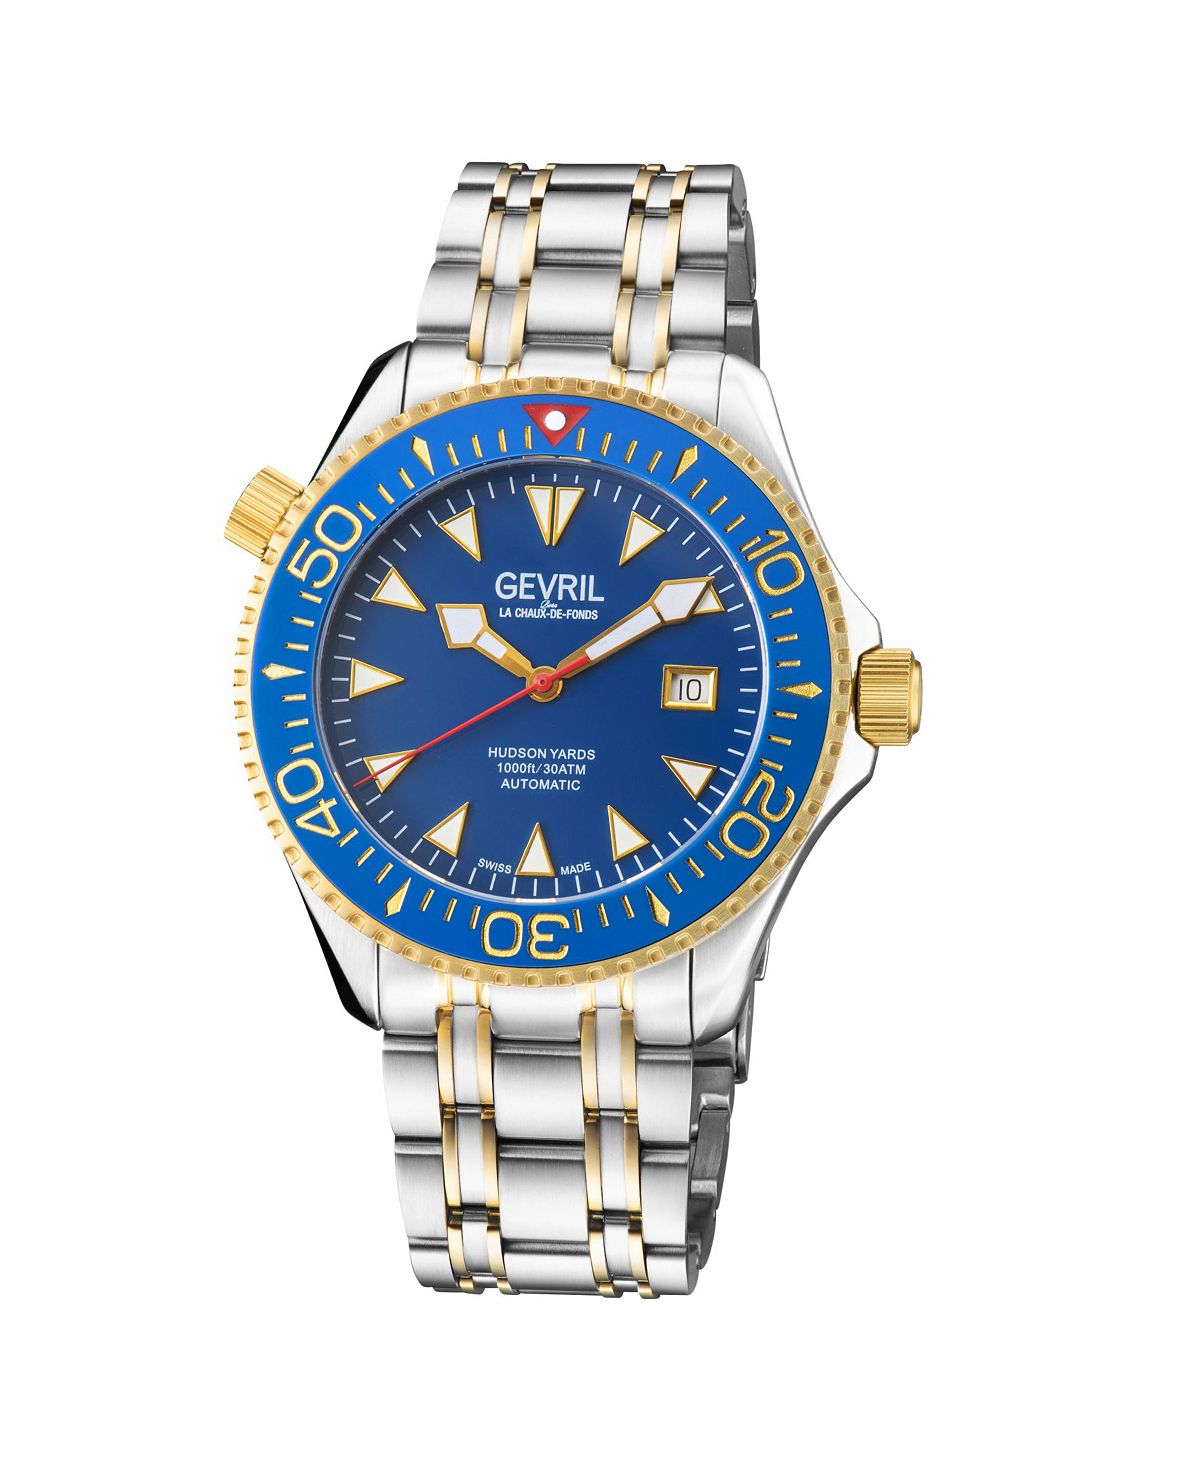 цена Мужские часы Hudson Yards 48803 швейцарские автоматические часы-браслет 44 мм Gevril